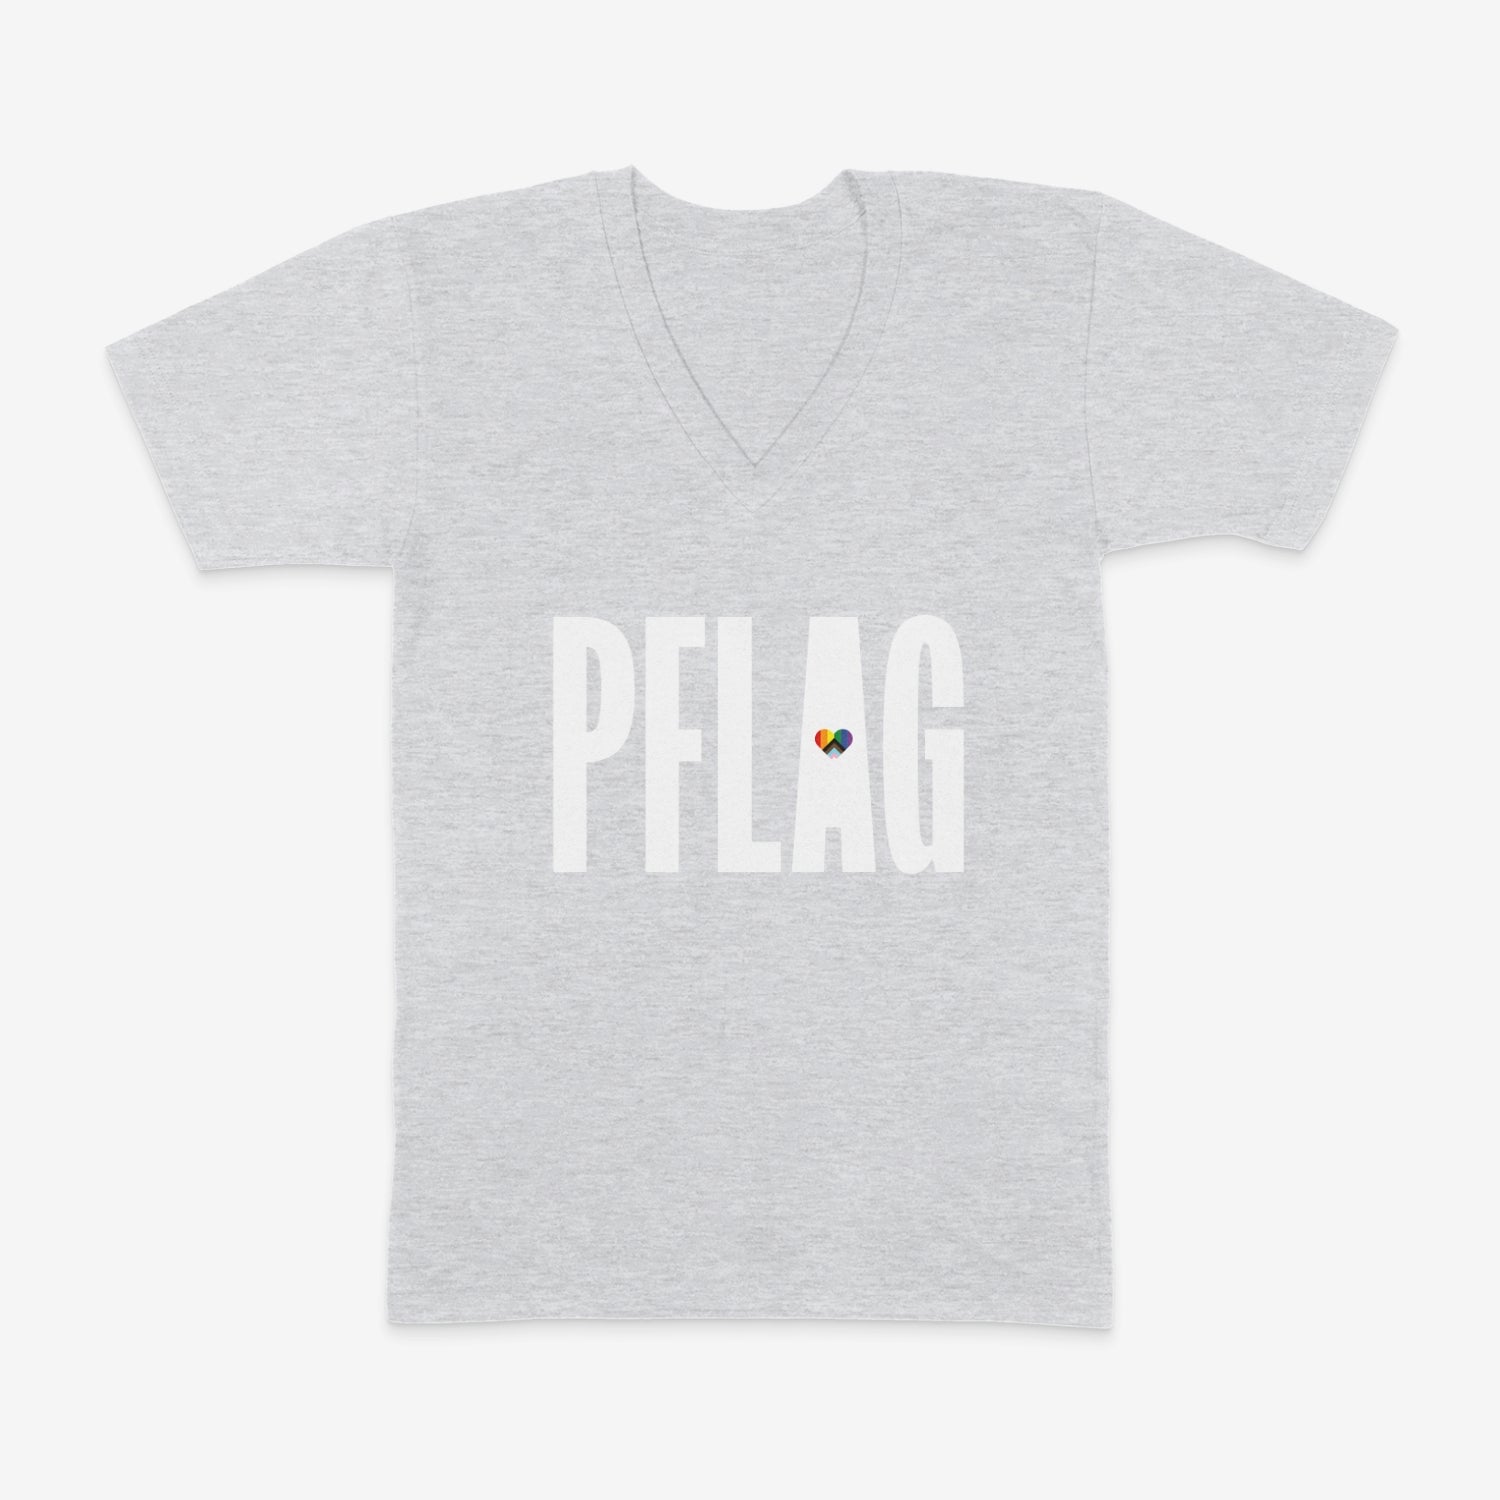 PFLAG Logo - Progress Heart - Wide-Cut V-Neck Short Sleeve T-Shirt